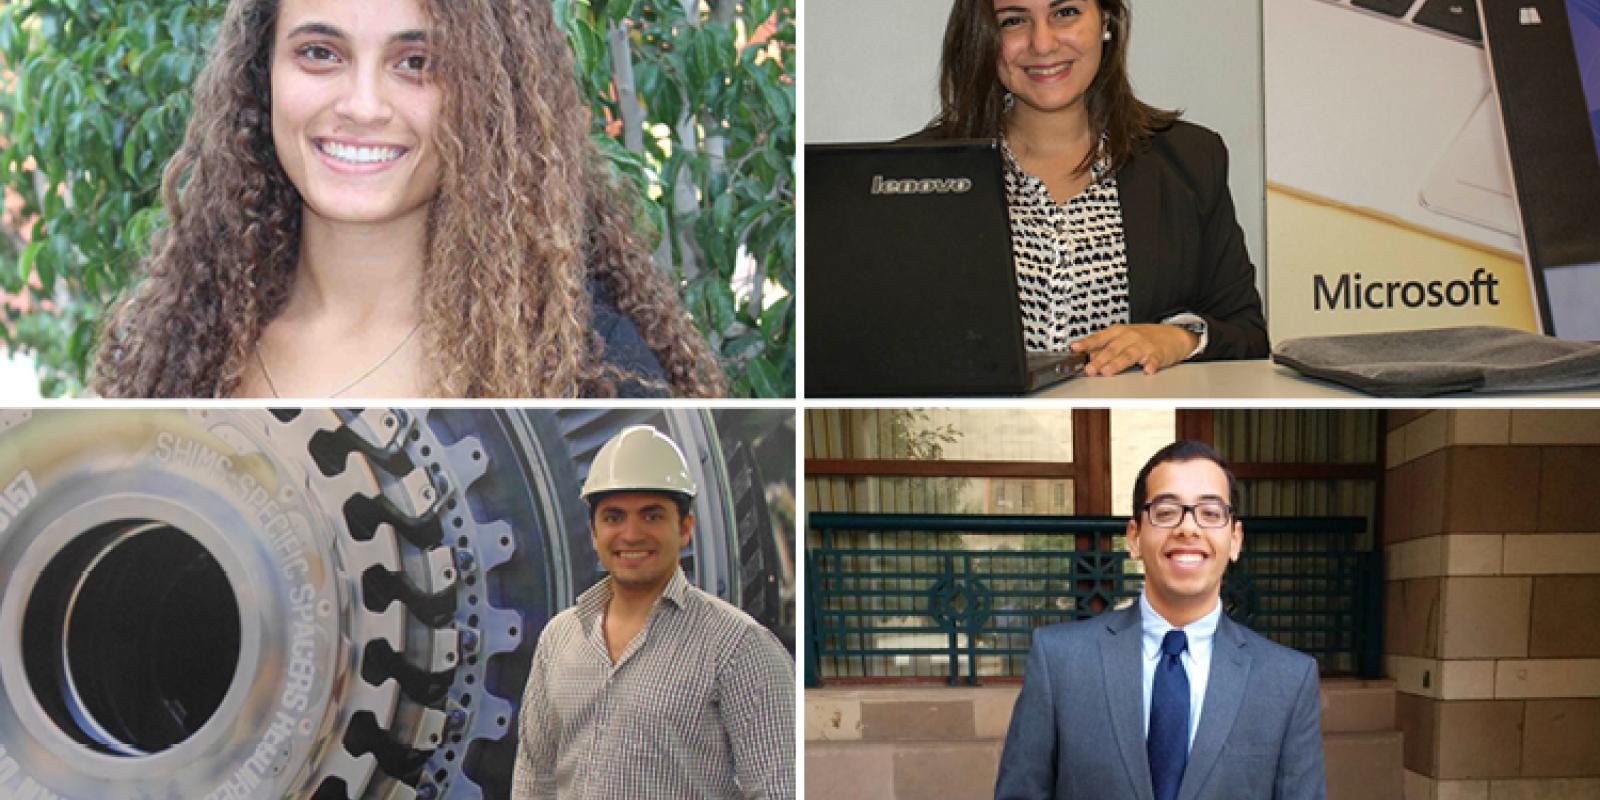 As part of the AUC Career Center's Internship Program, students Rachel Naguib, Rana Gouda, Marwan Kamel and Mohamed El Sadek gained valuable career experience